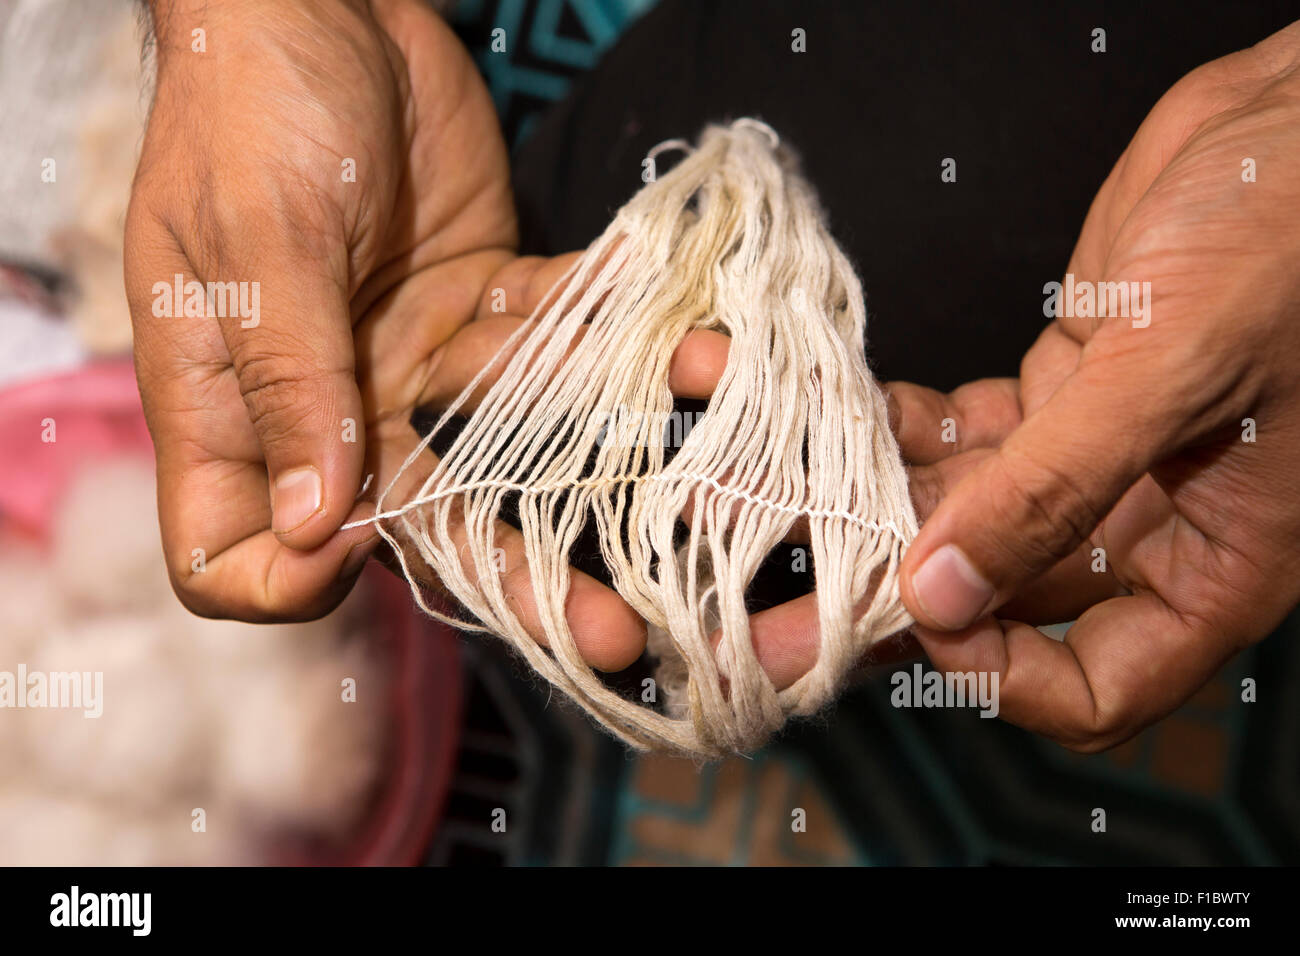 India, Jammu & Kashmir, Srinagar, hands holding spin pashmina wool thread, twisted into 3 ply yarn Stock Photo